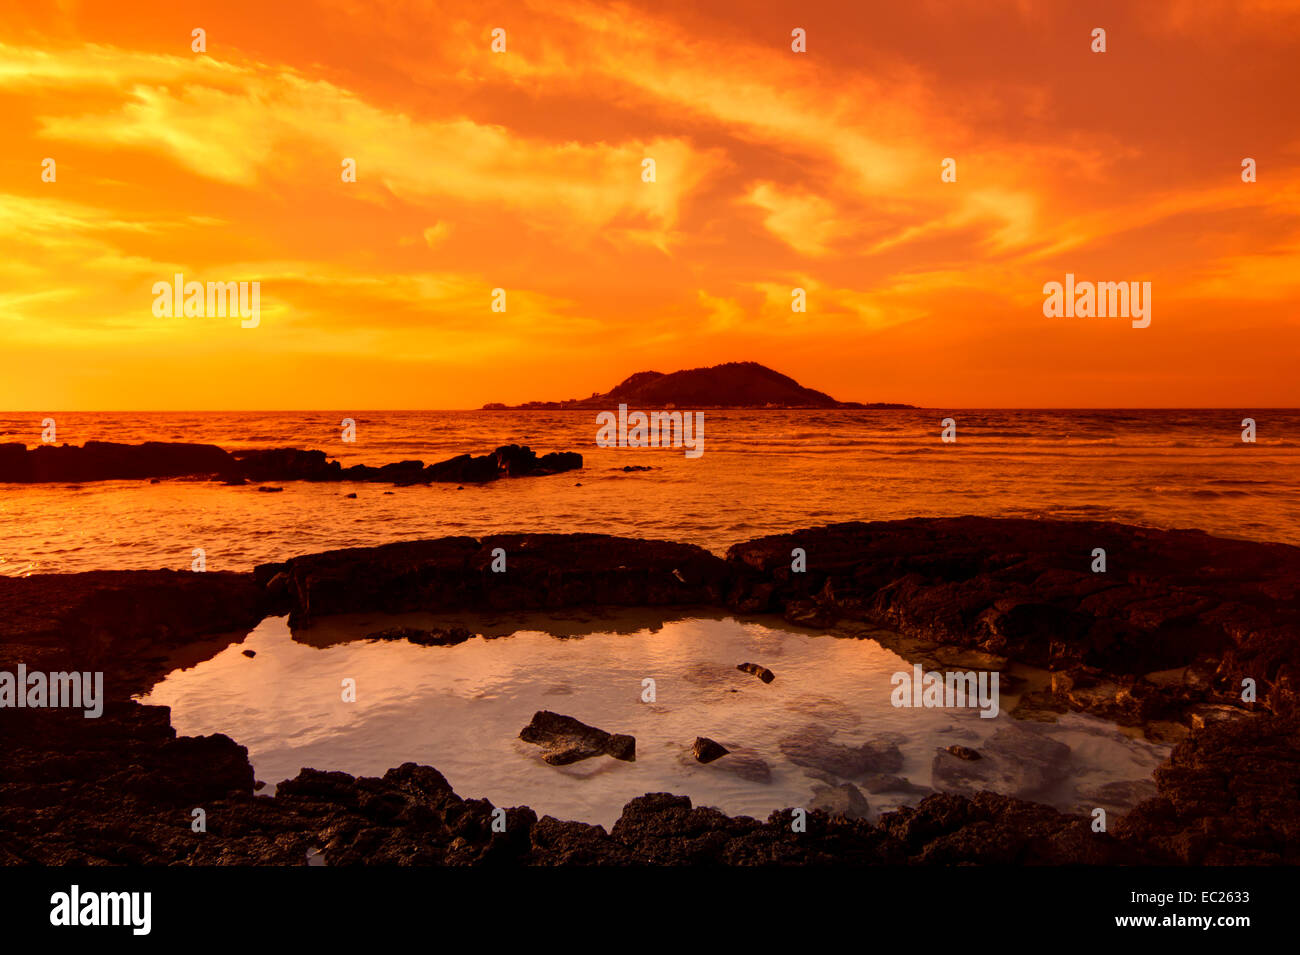 Sunset seascape and volcano, Cheju island, Korea. Stock Photo